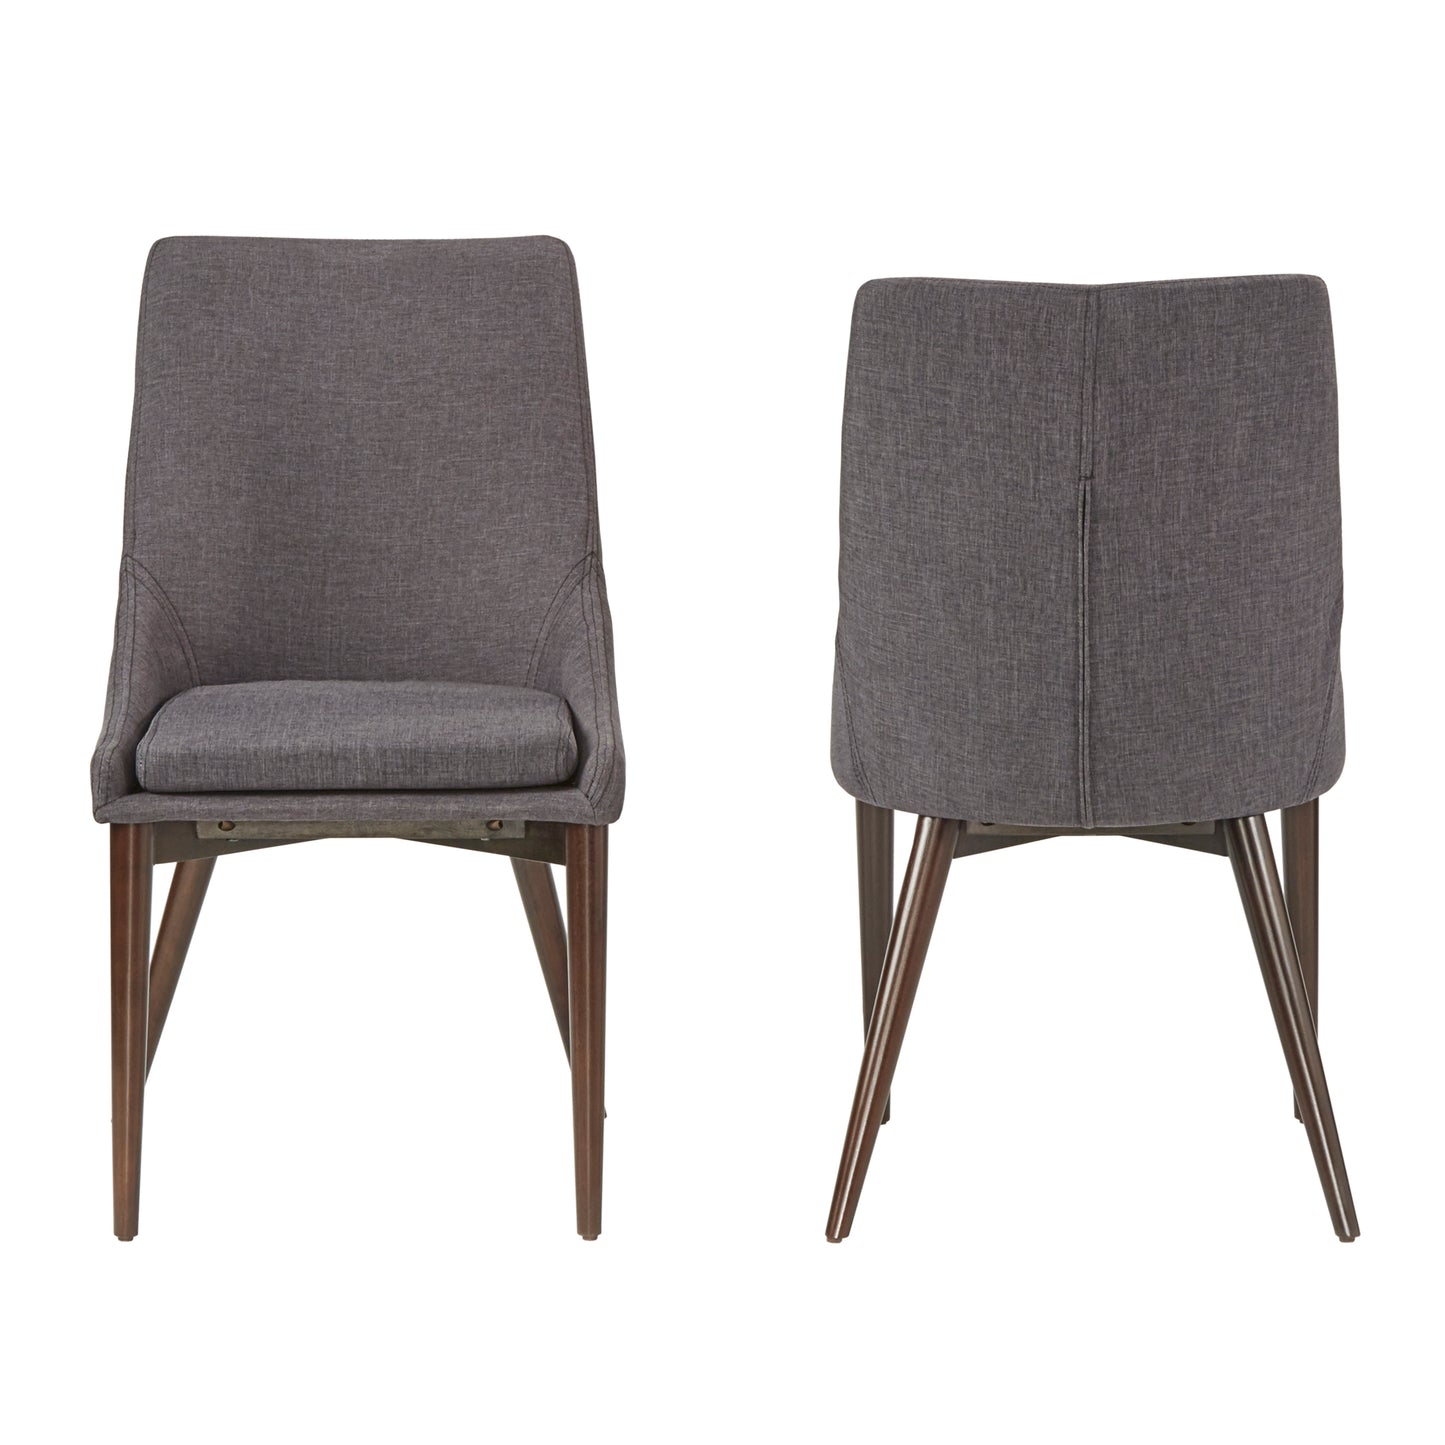 Mid-Century Barrel Back Linen Dining Chairs (Set of 2) - Dark Grey Linen